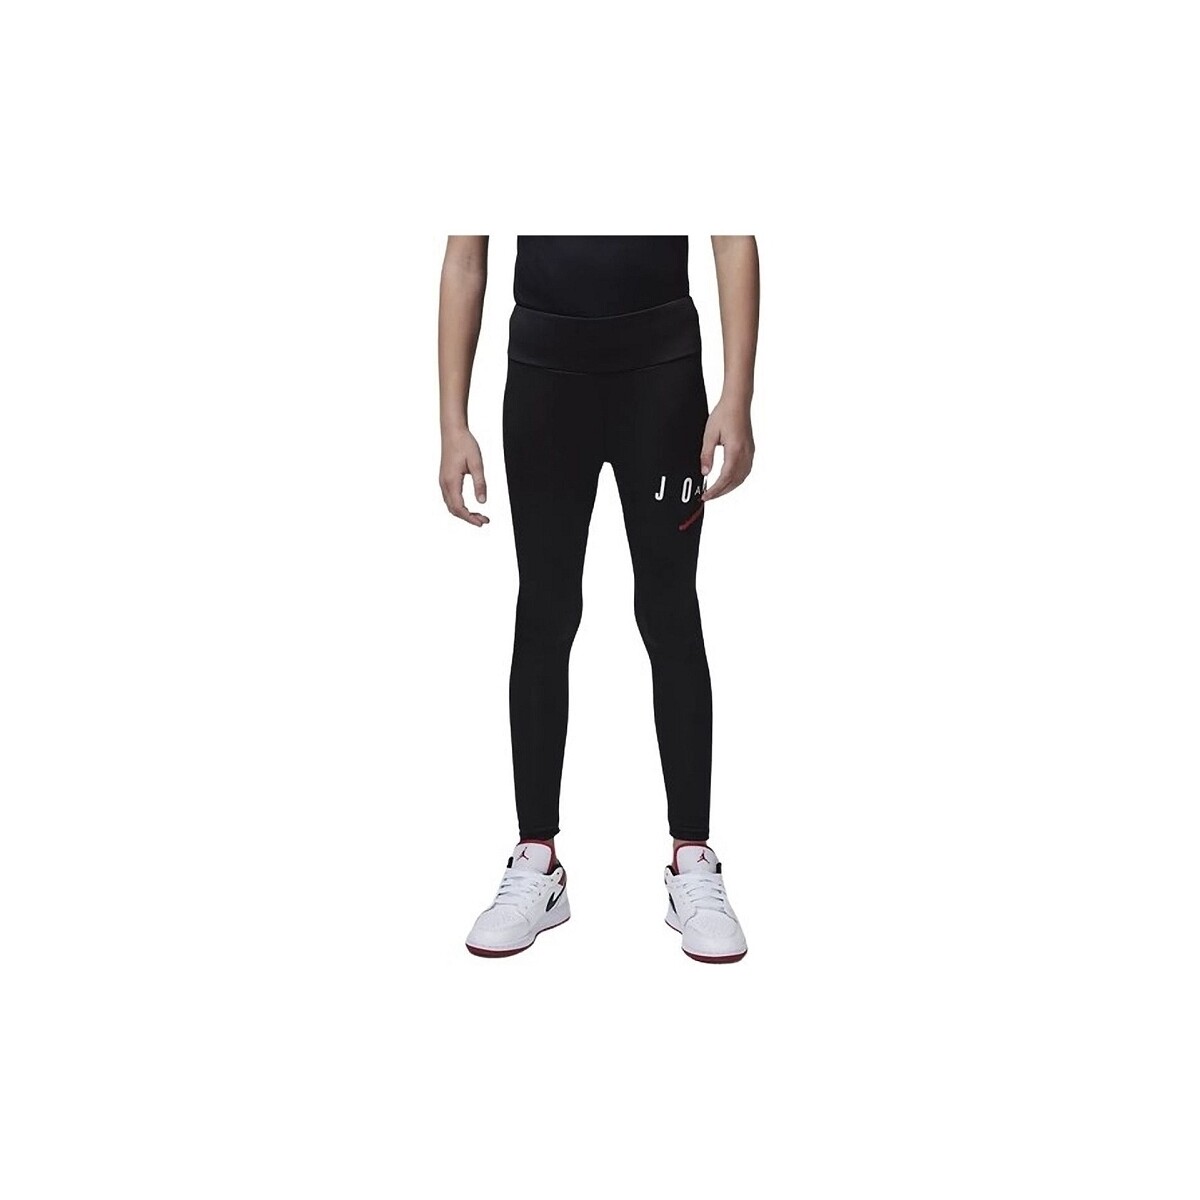 Oblačila Deklice Trenirka komplet Nike JUMPMAN SUSTAINABLE LEGGINGS Črna